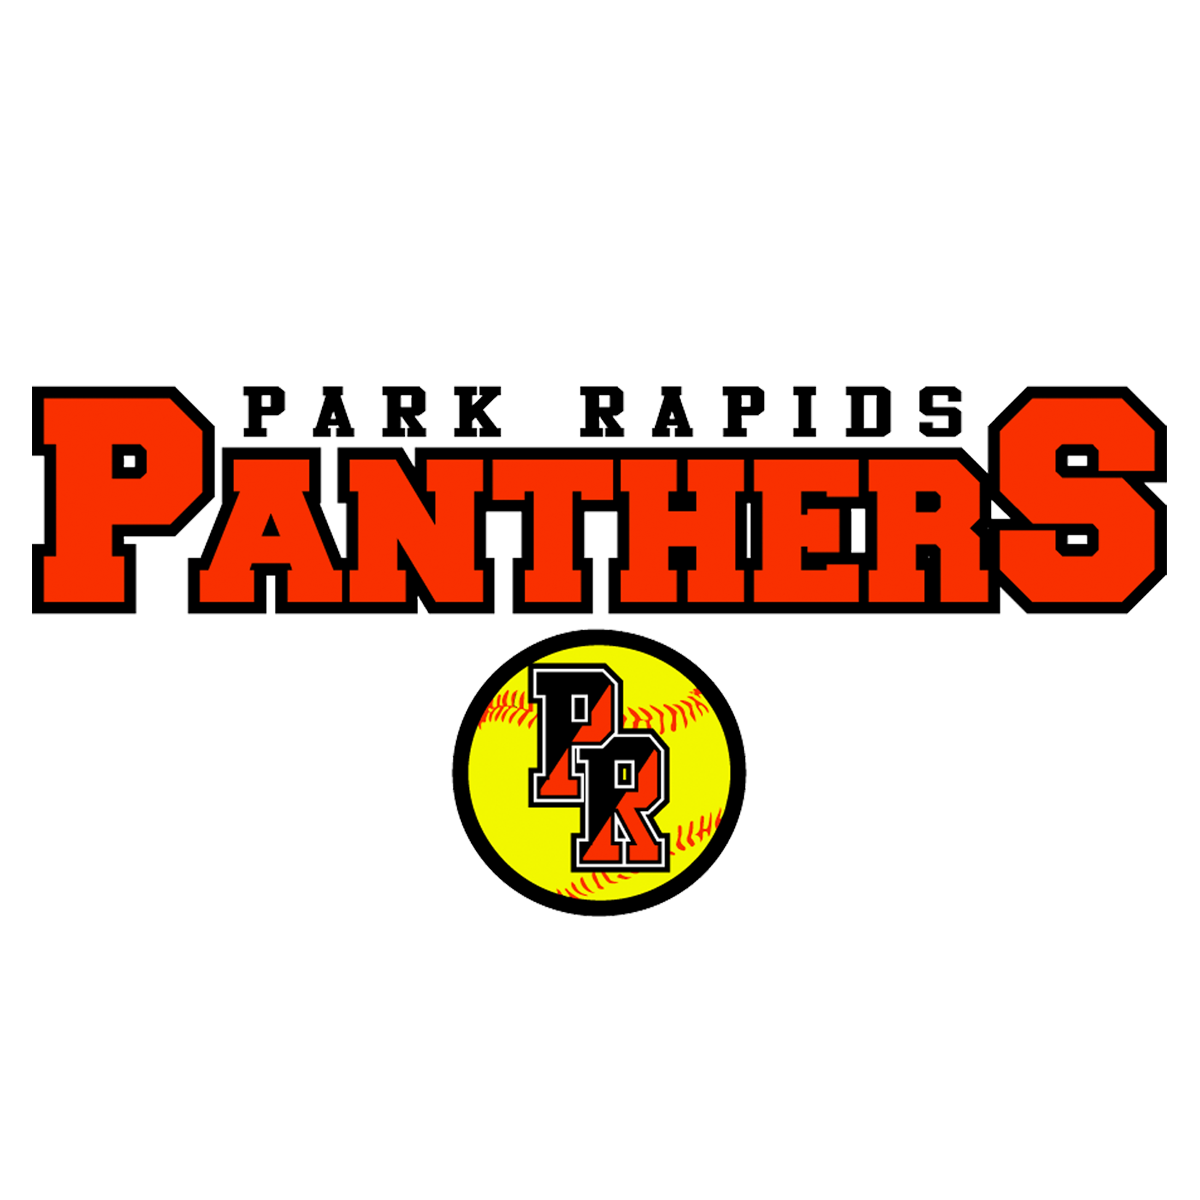 Park Rapids Panthers Softball Team Store